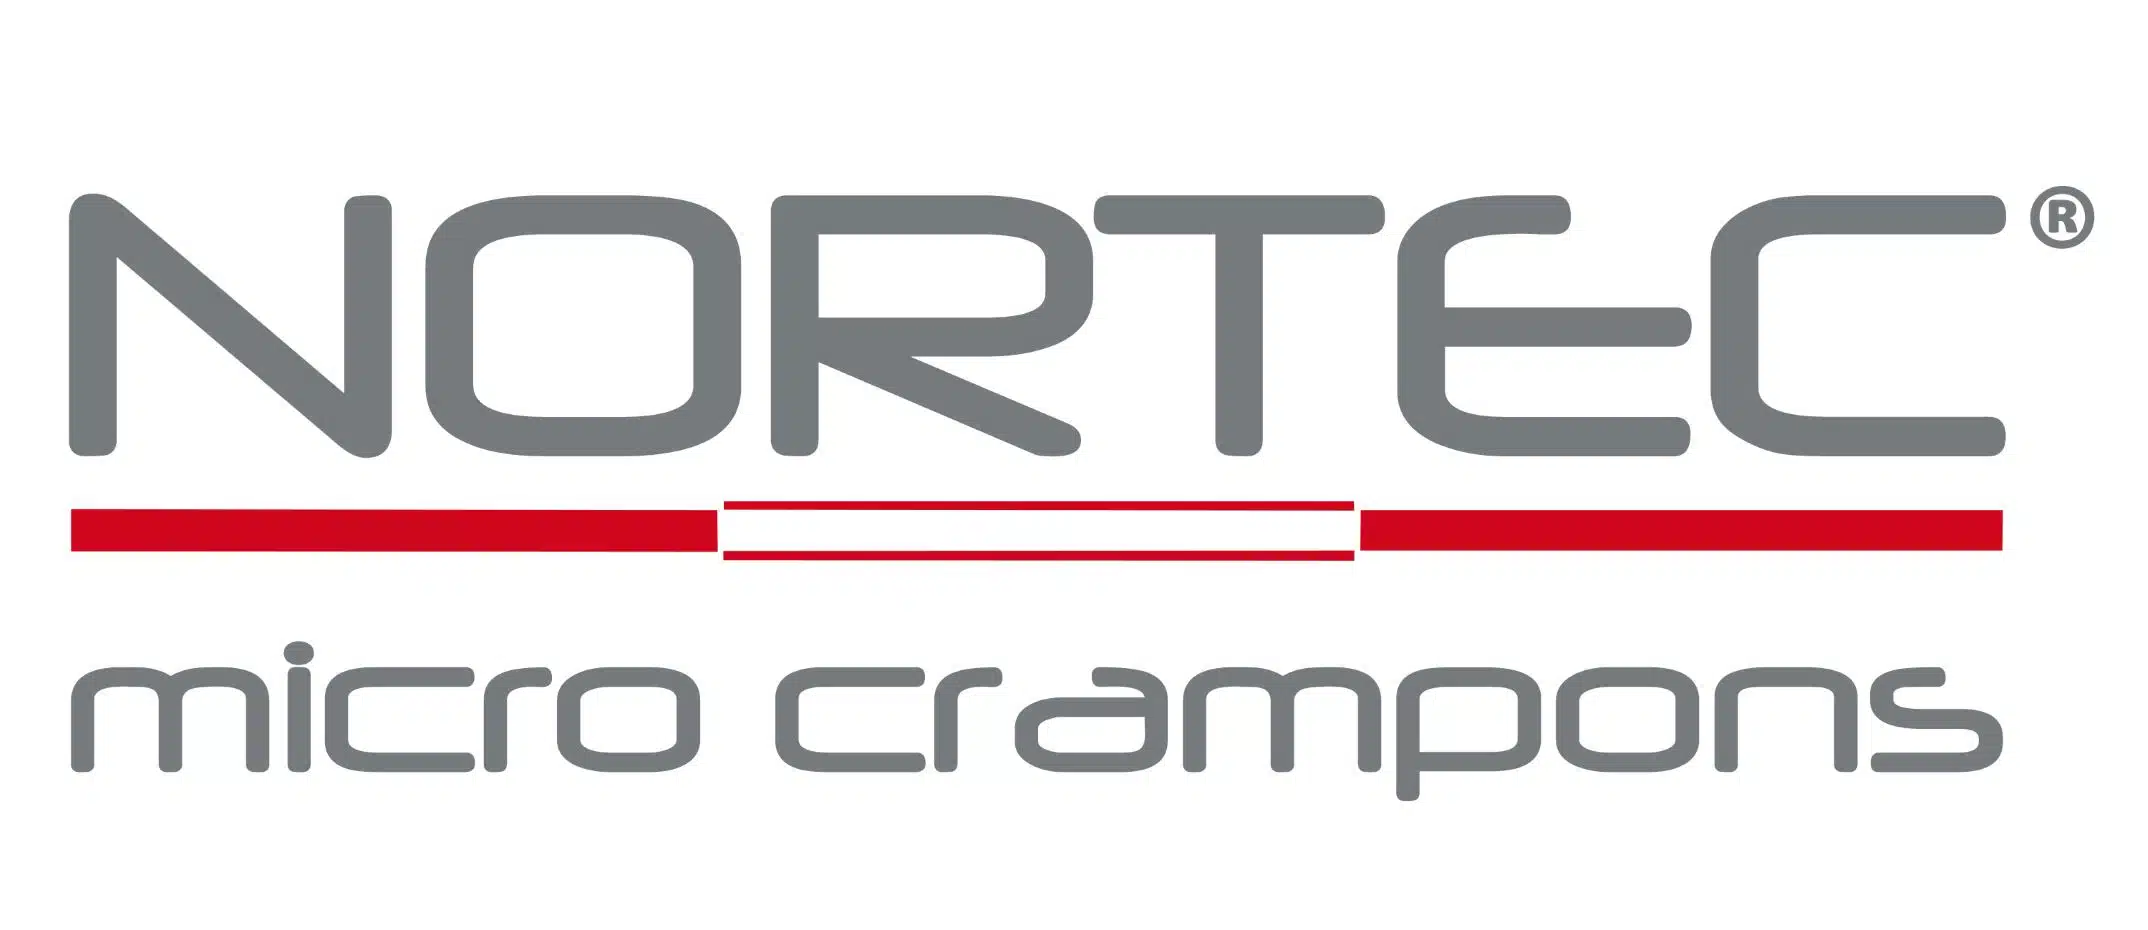 NORTEC - micro crampons